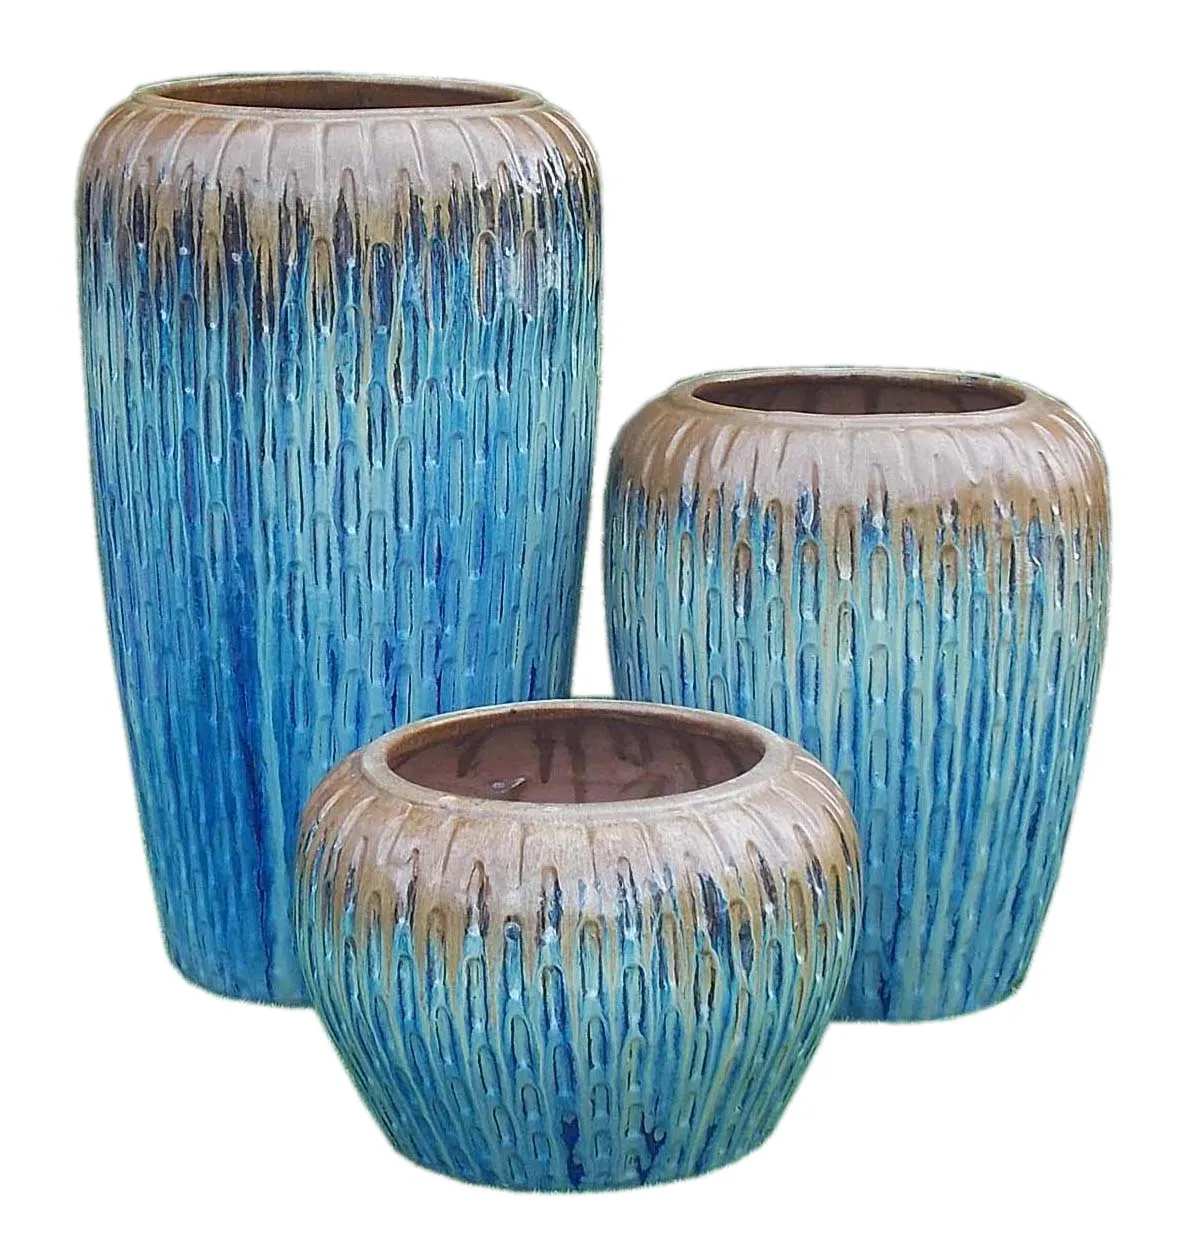 Wholesale European-Style Glazed Ceramic Flower Pots Kit Outdoor Plant Planter for Home Garden Nursery or Room Floor Use